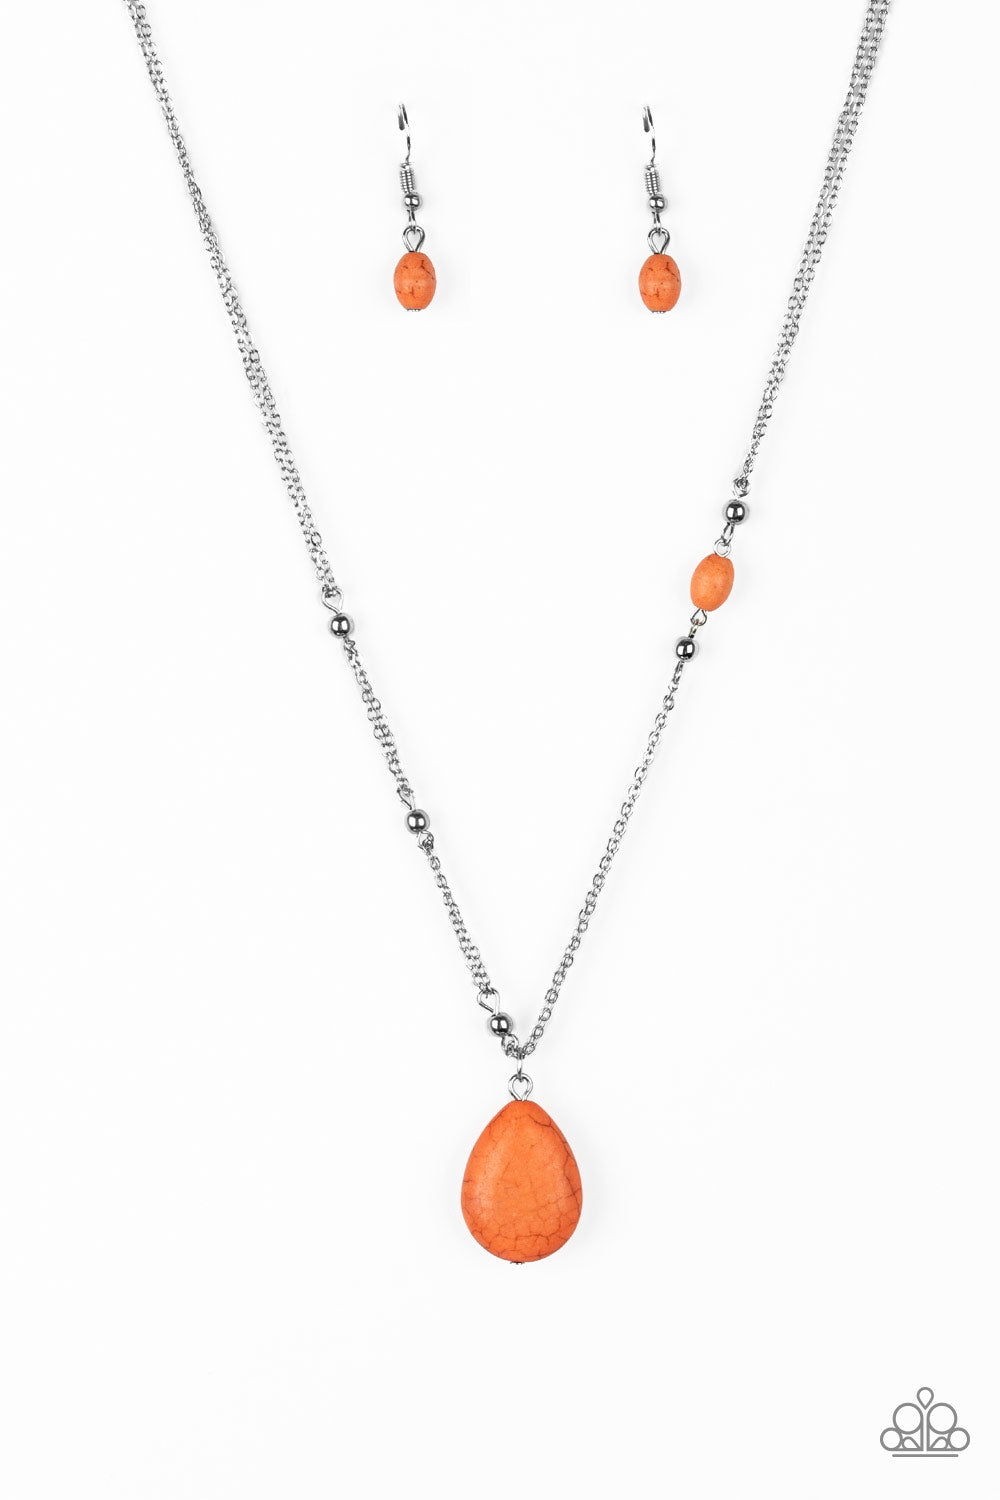 Peaceful Prairies Orange Paparazzi Necklaces Cashmere Pink Jewels - Cashmere Pink Jewels & Accessories, Cashmere Pink Jewels & Accessories - Paparazzi